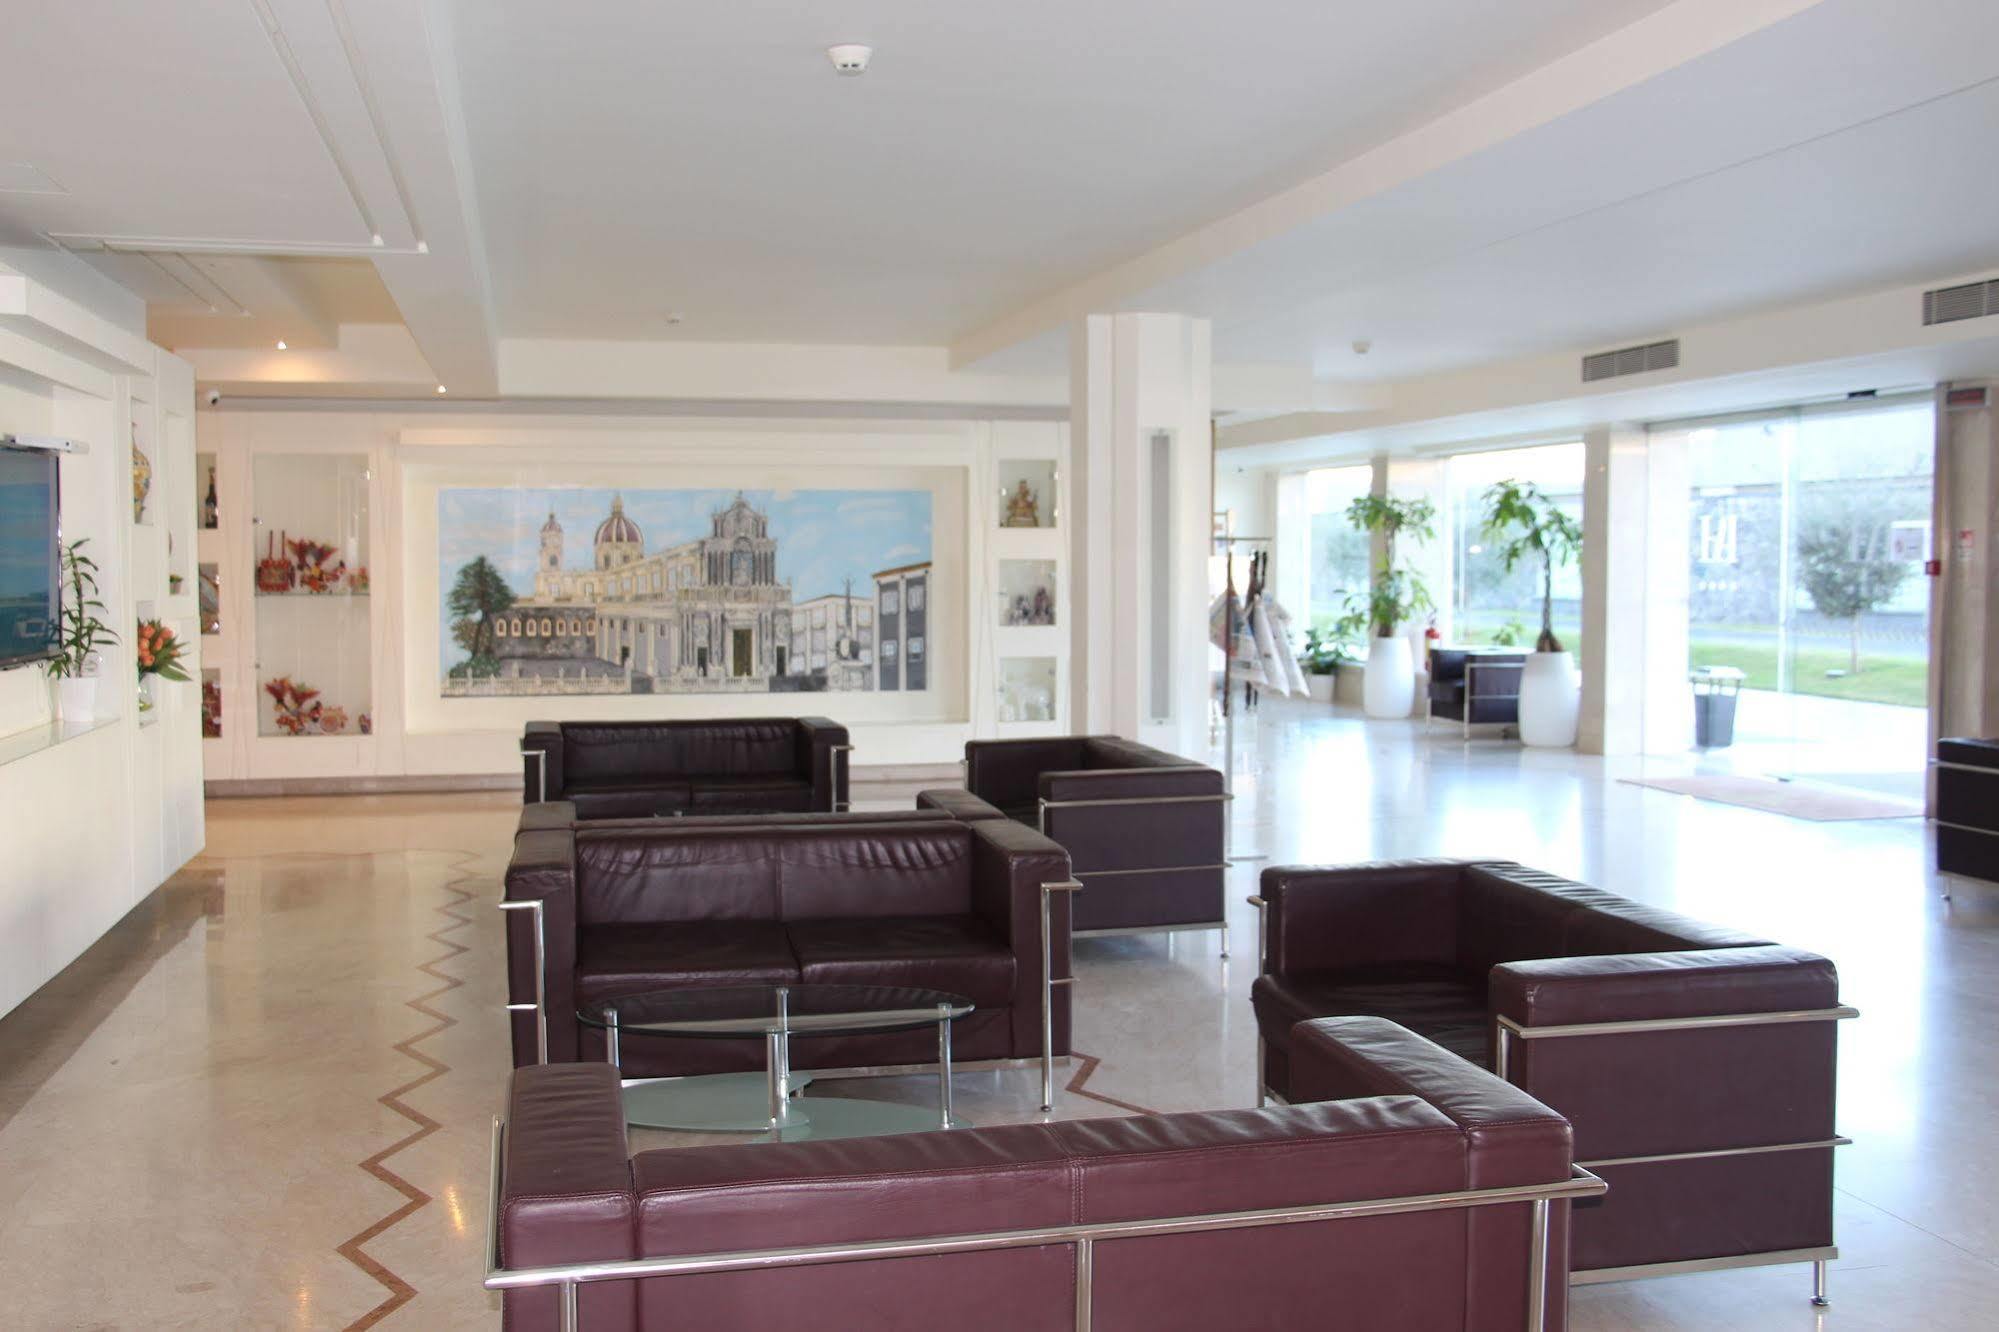 Catania International Airport Hotel Exterior foto